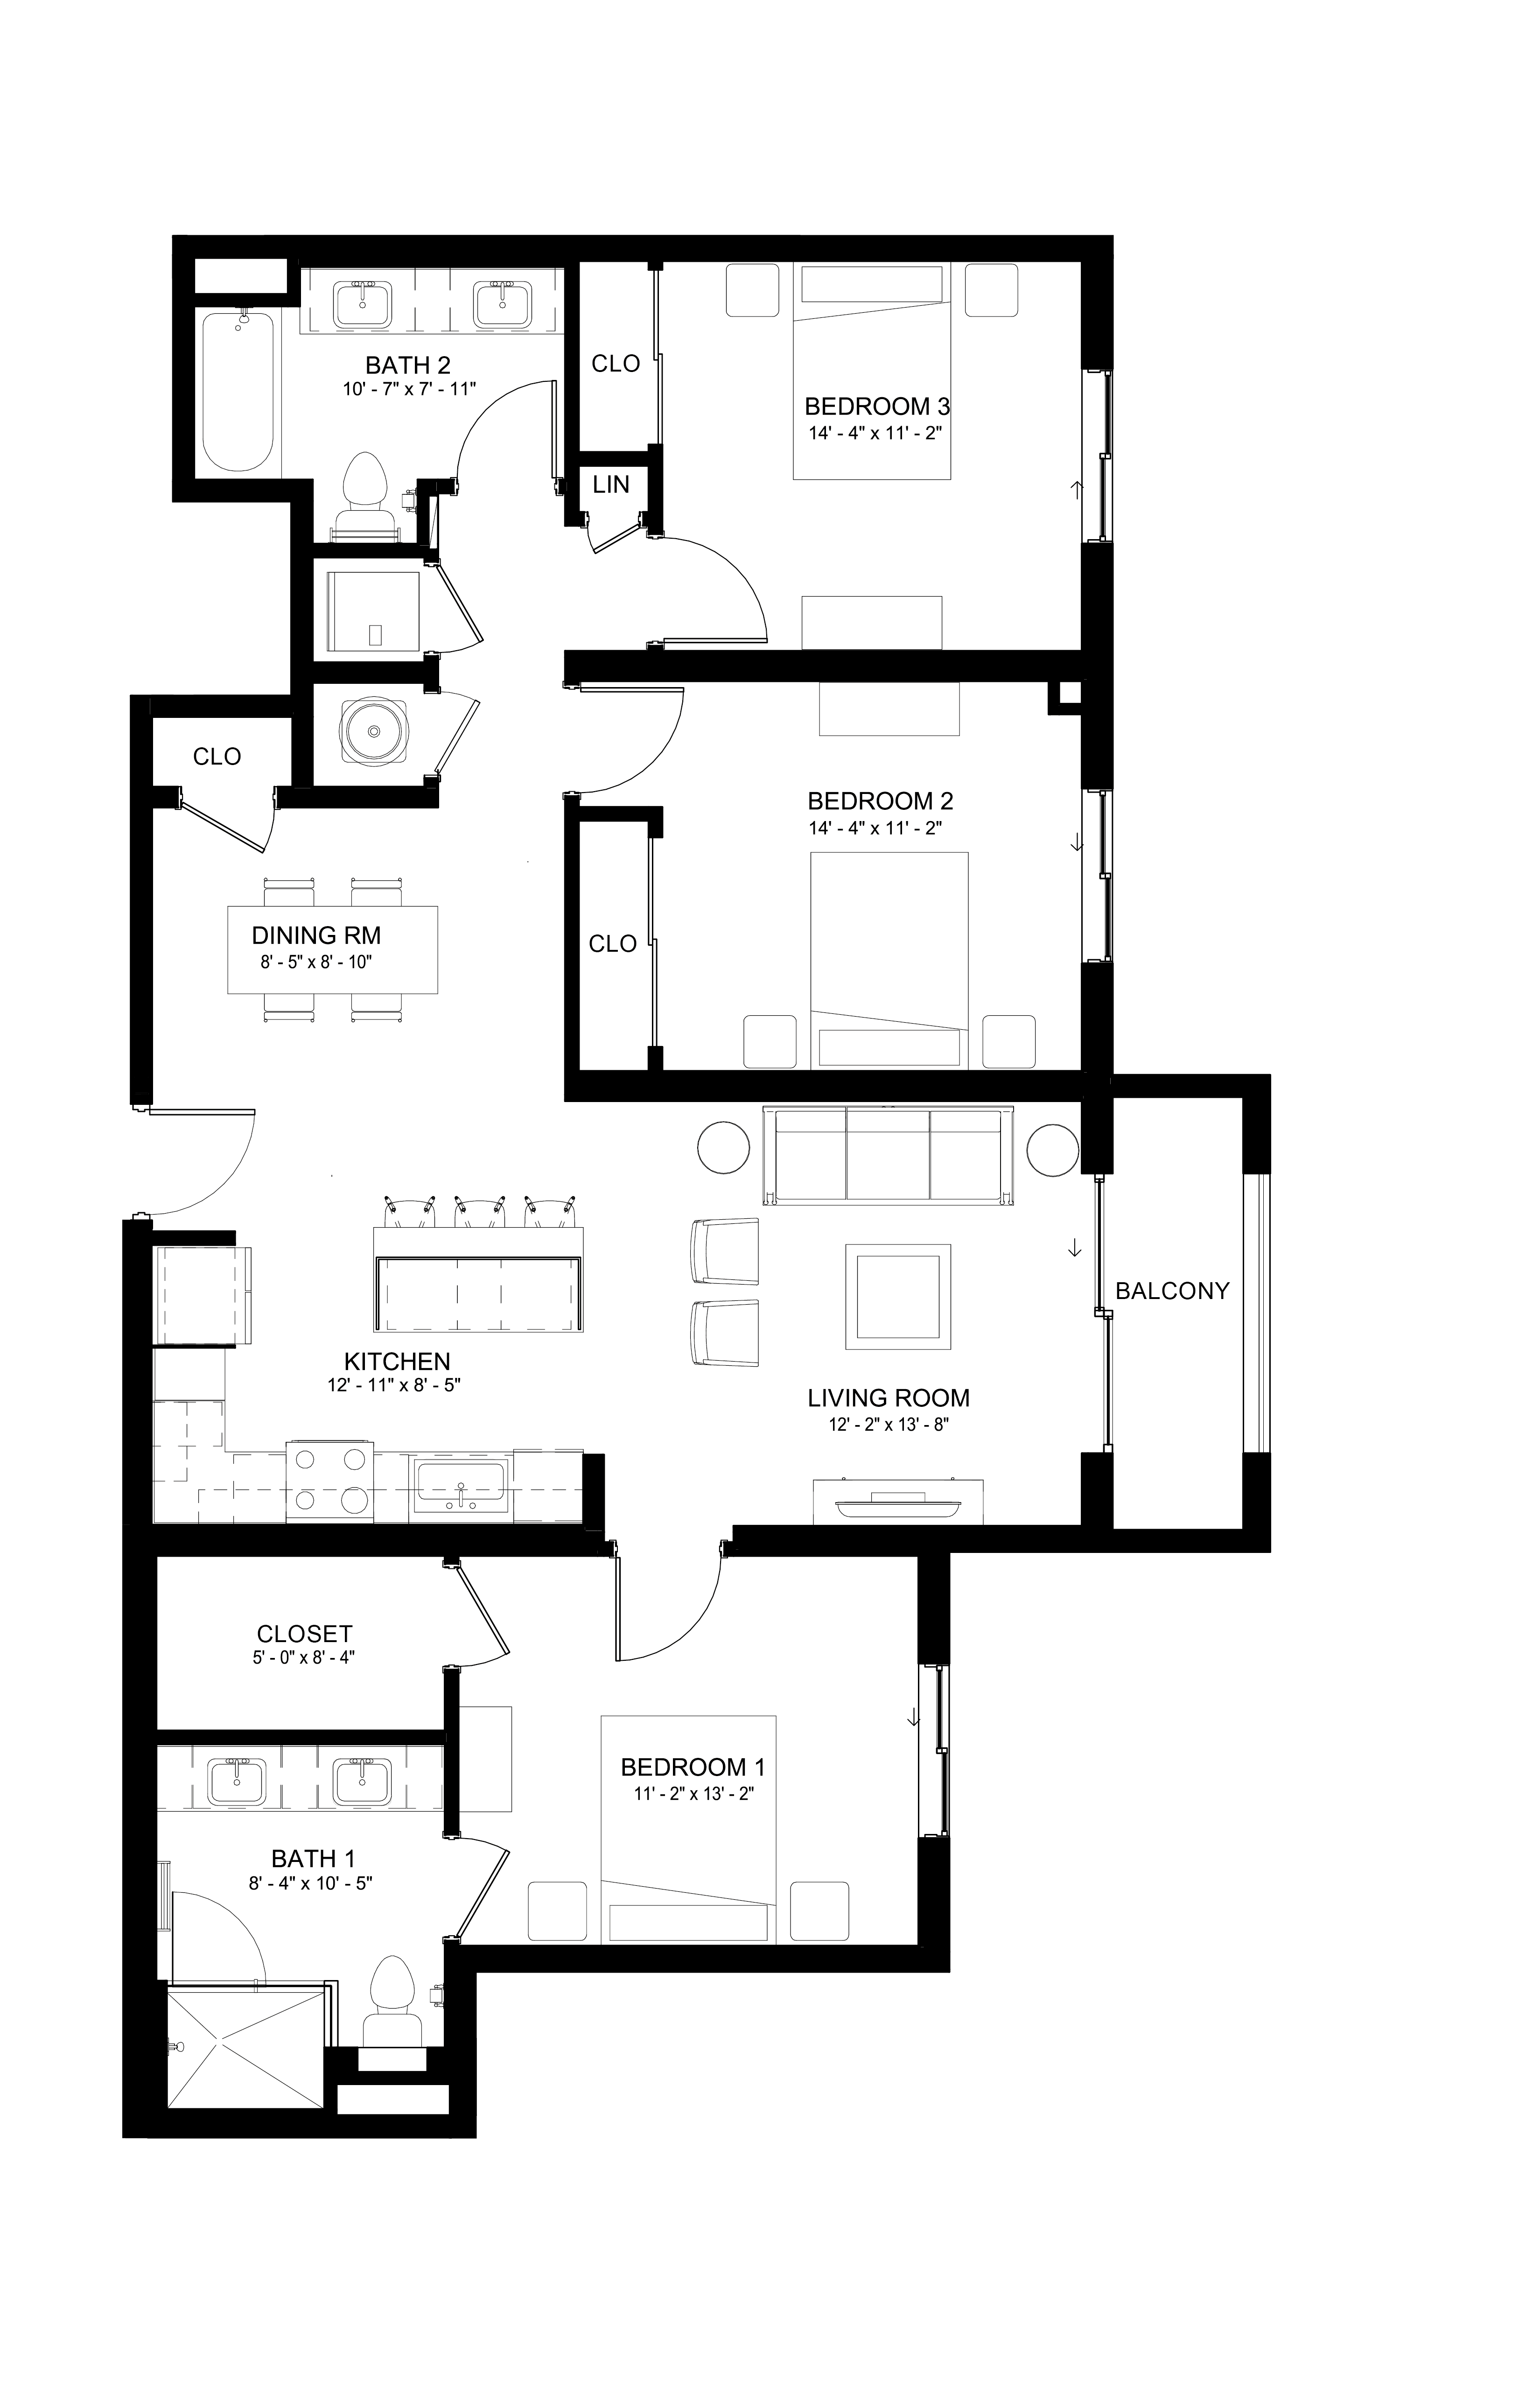 Apartment 501 floorplan